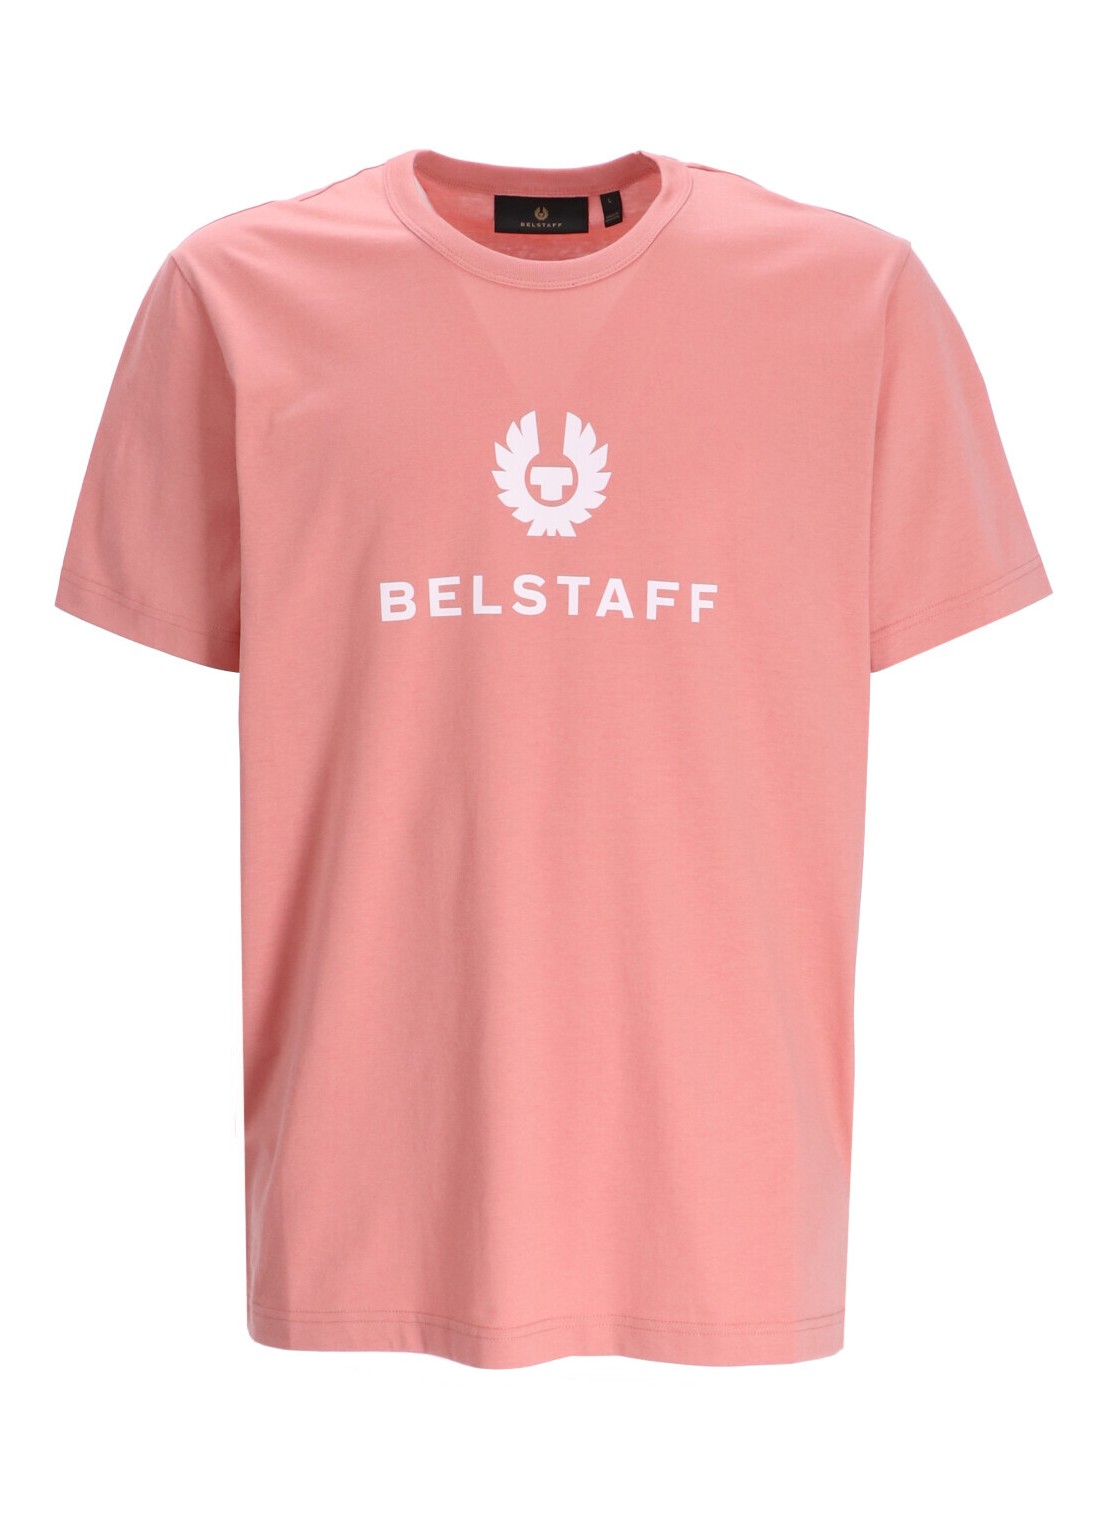 Camiseta belstaff t-shirt man belstaff signature t-shirt 104141 rstpk talla rosa
 